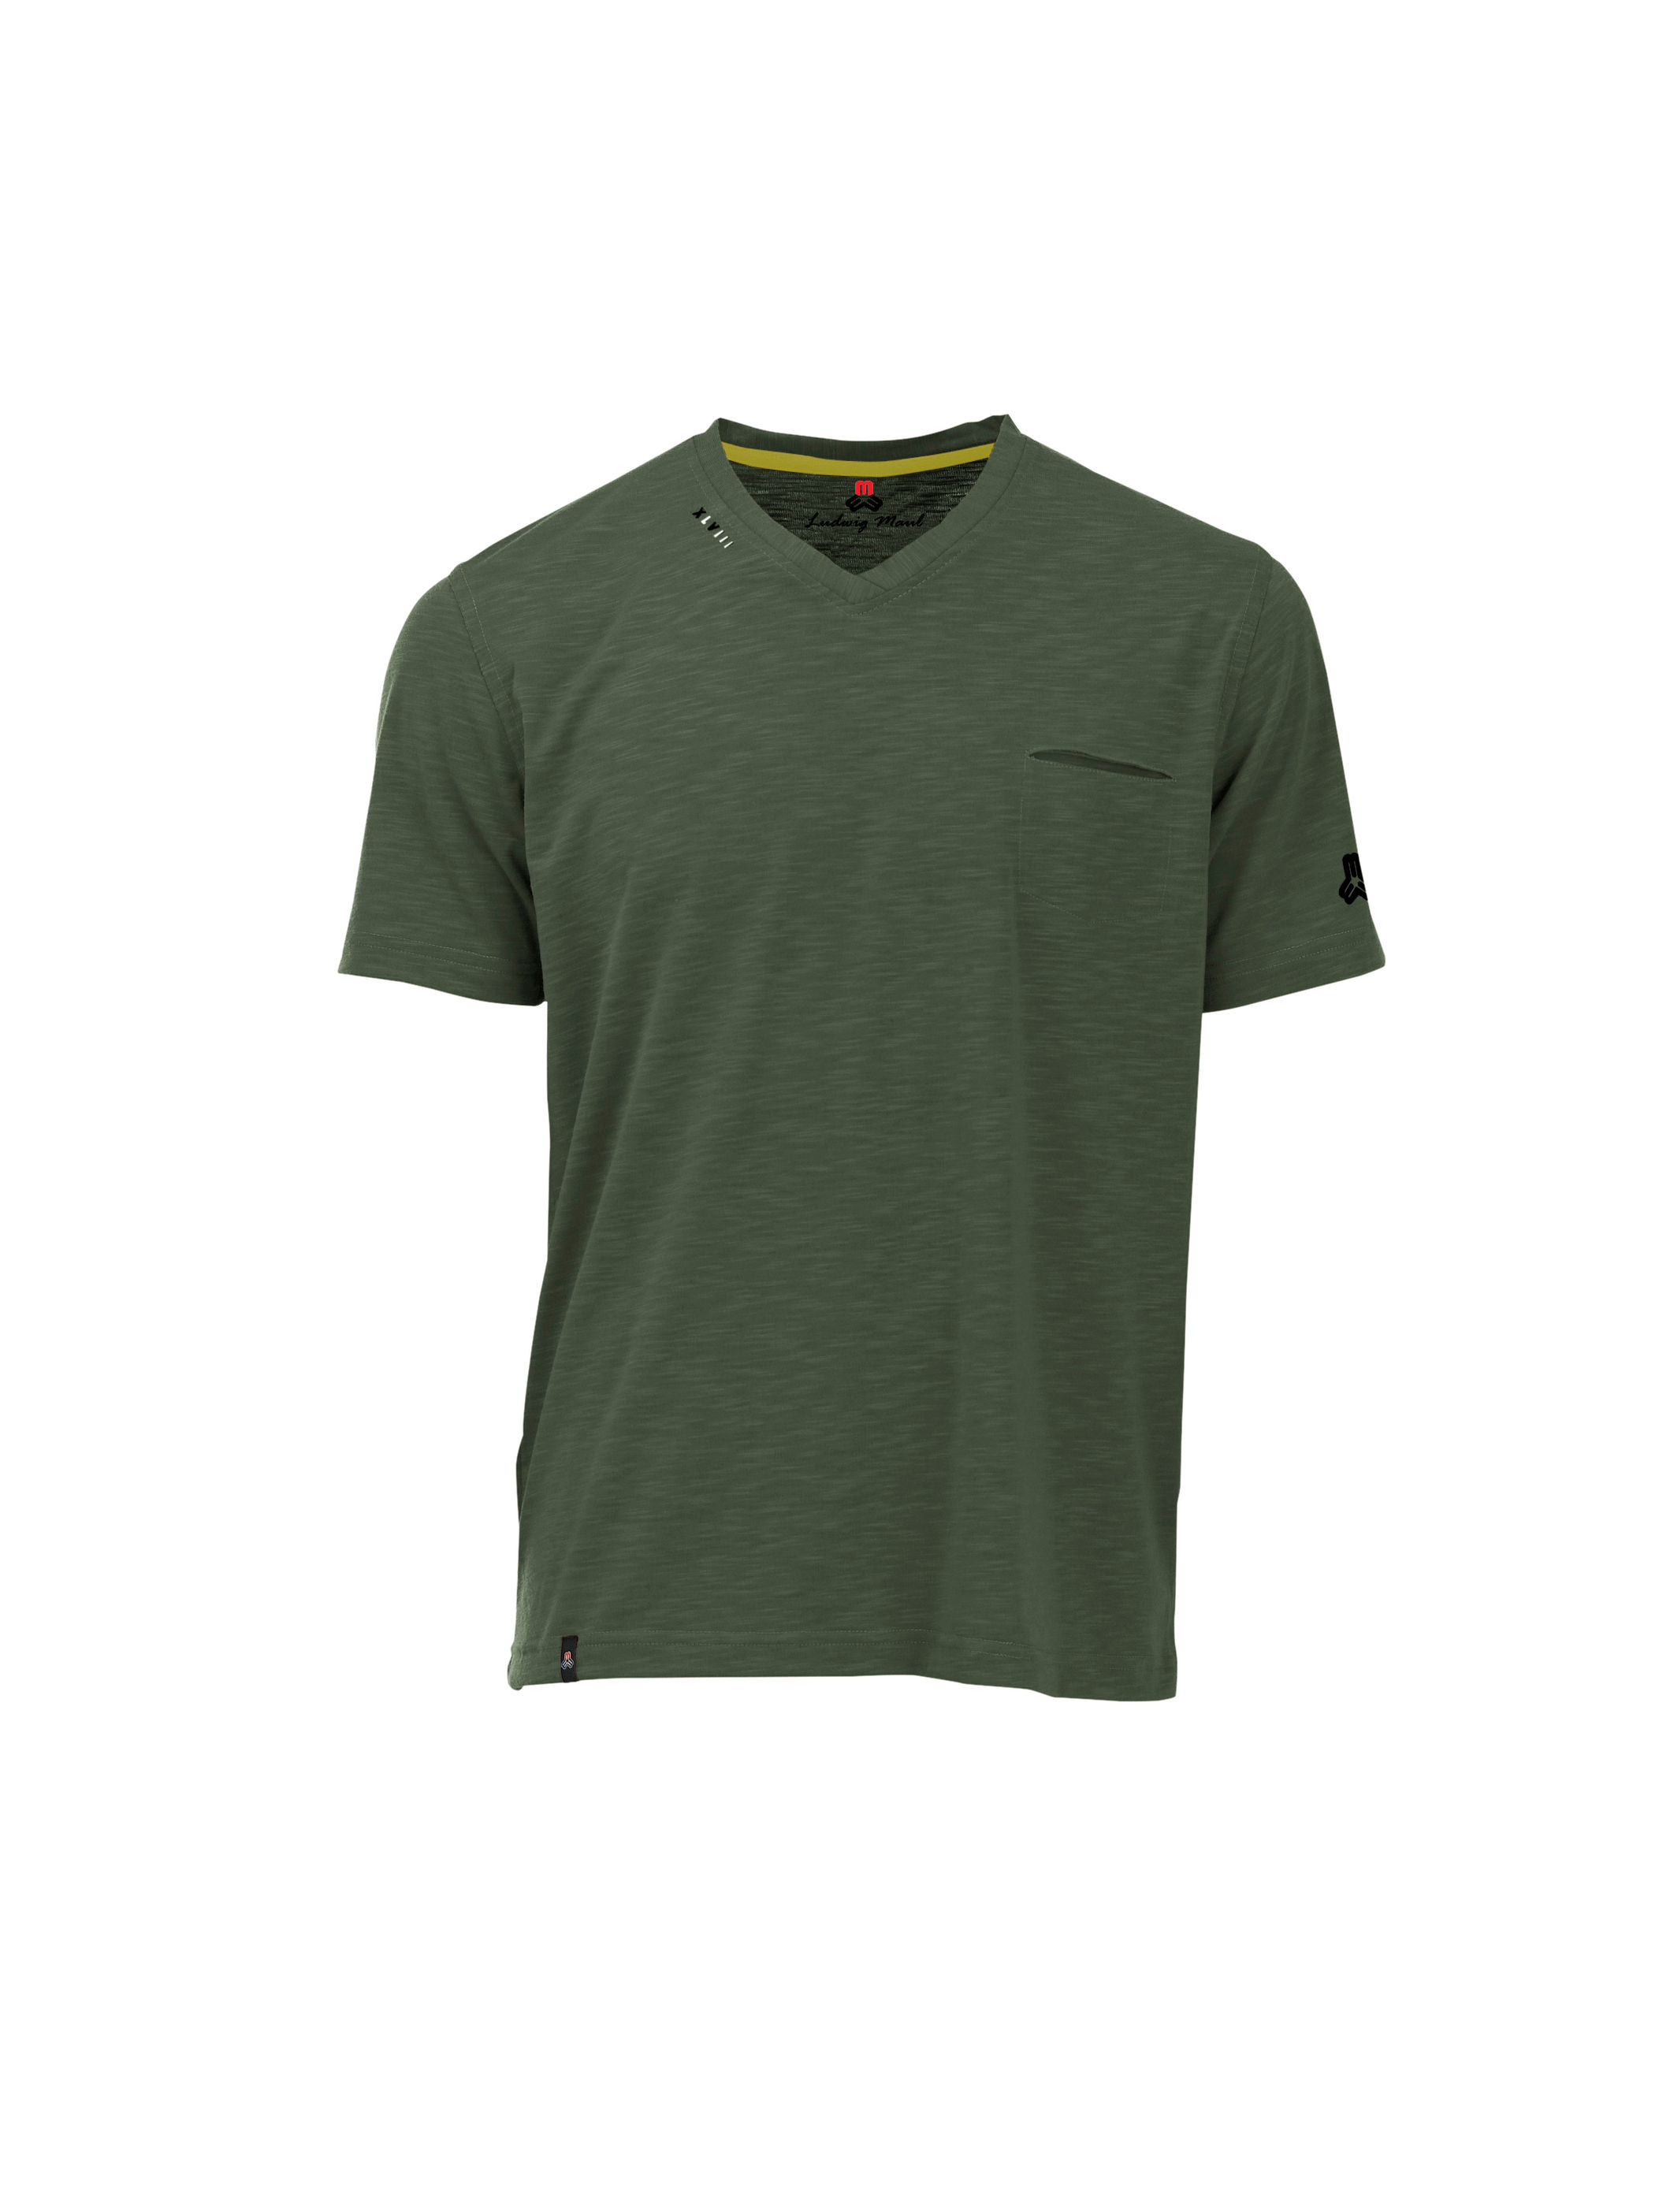 MAUL Ravensburg-Funktions T-Shirt grün Größe: 52 online kaufen - Orbisana